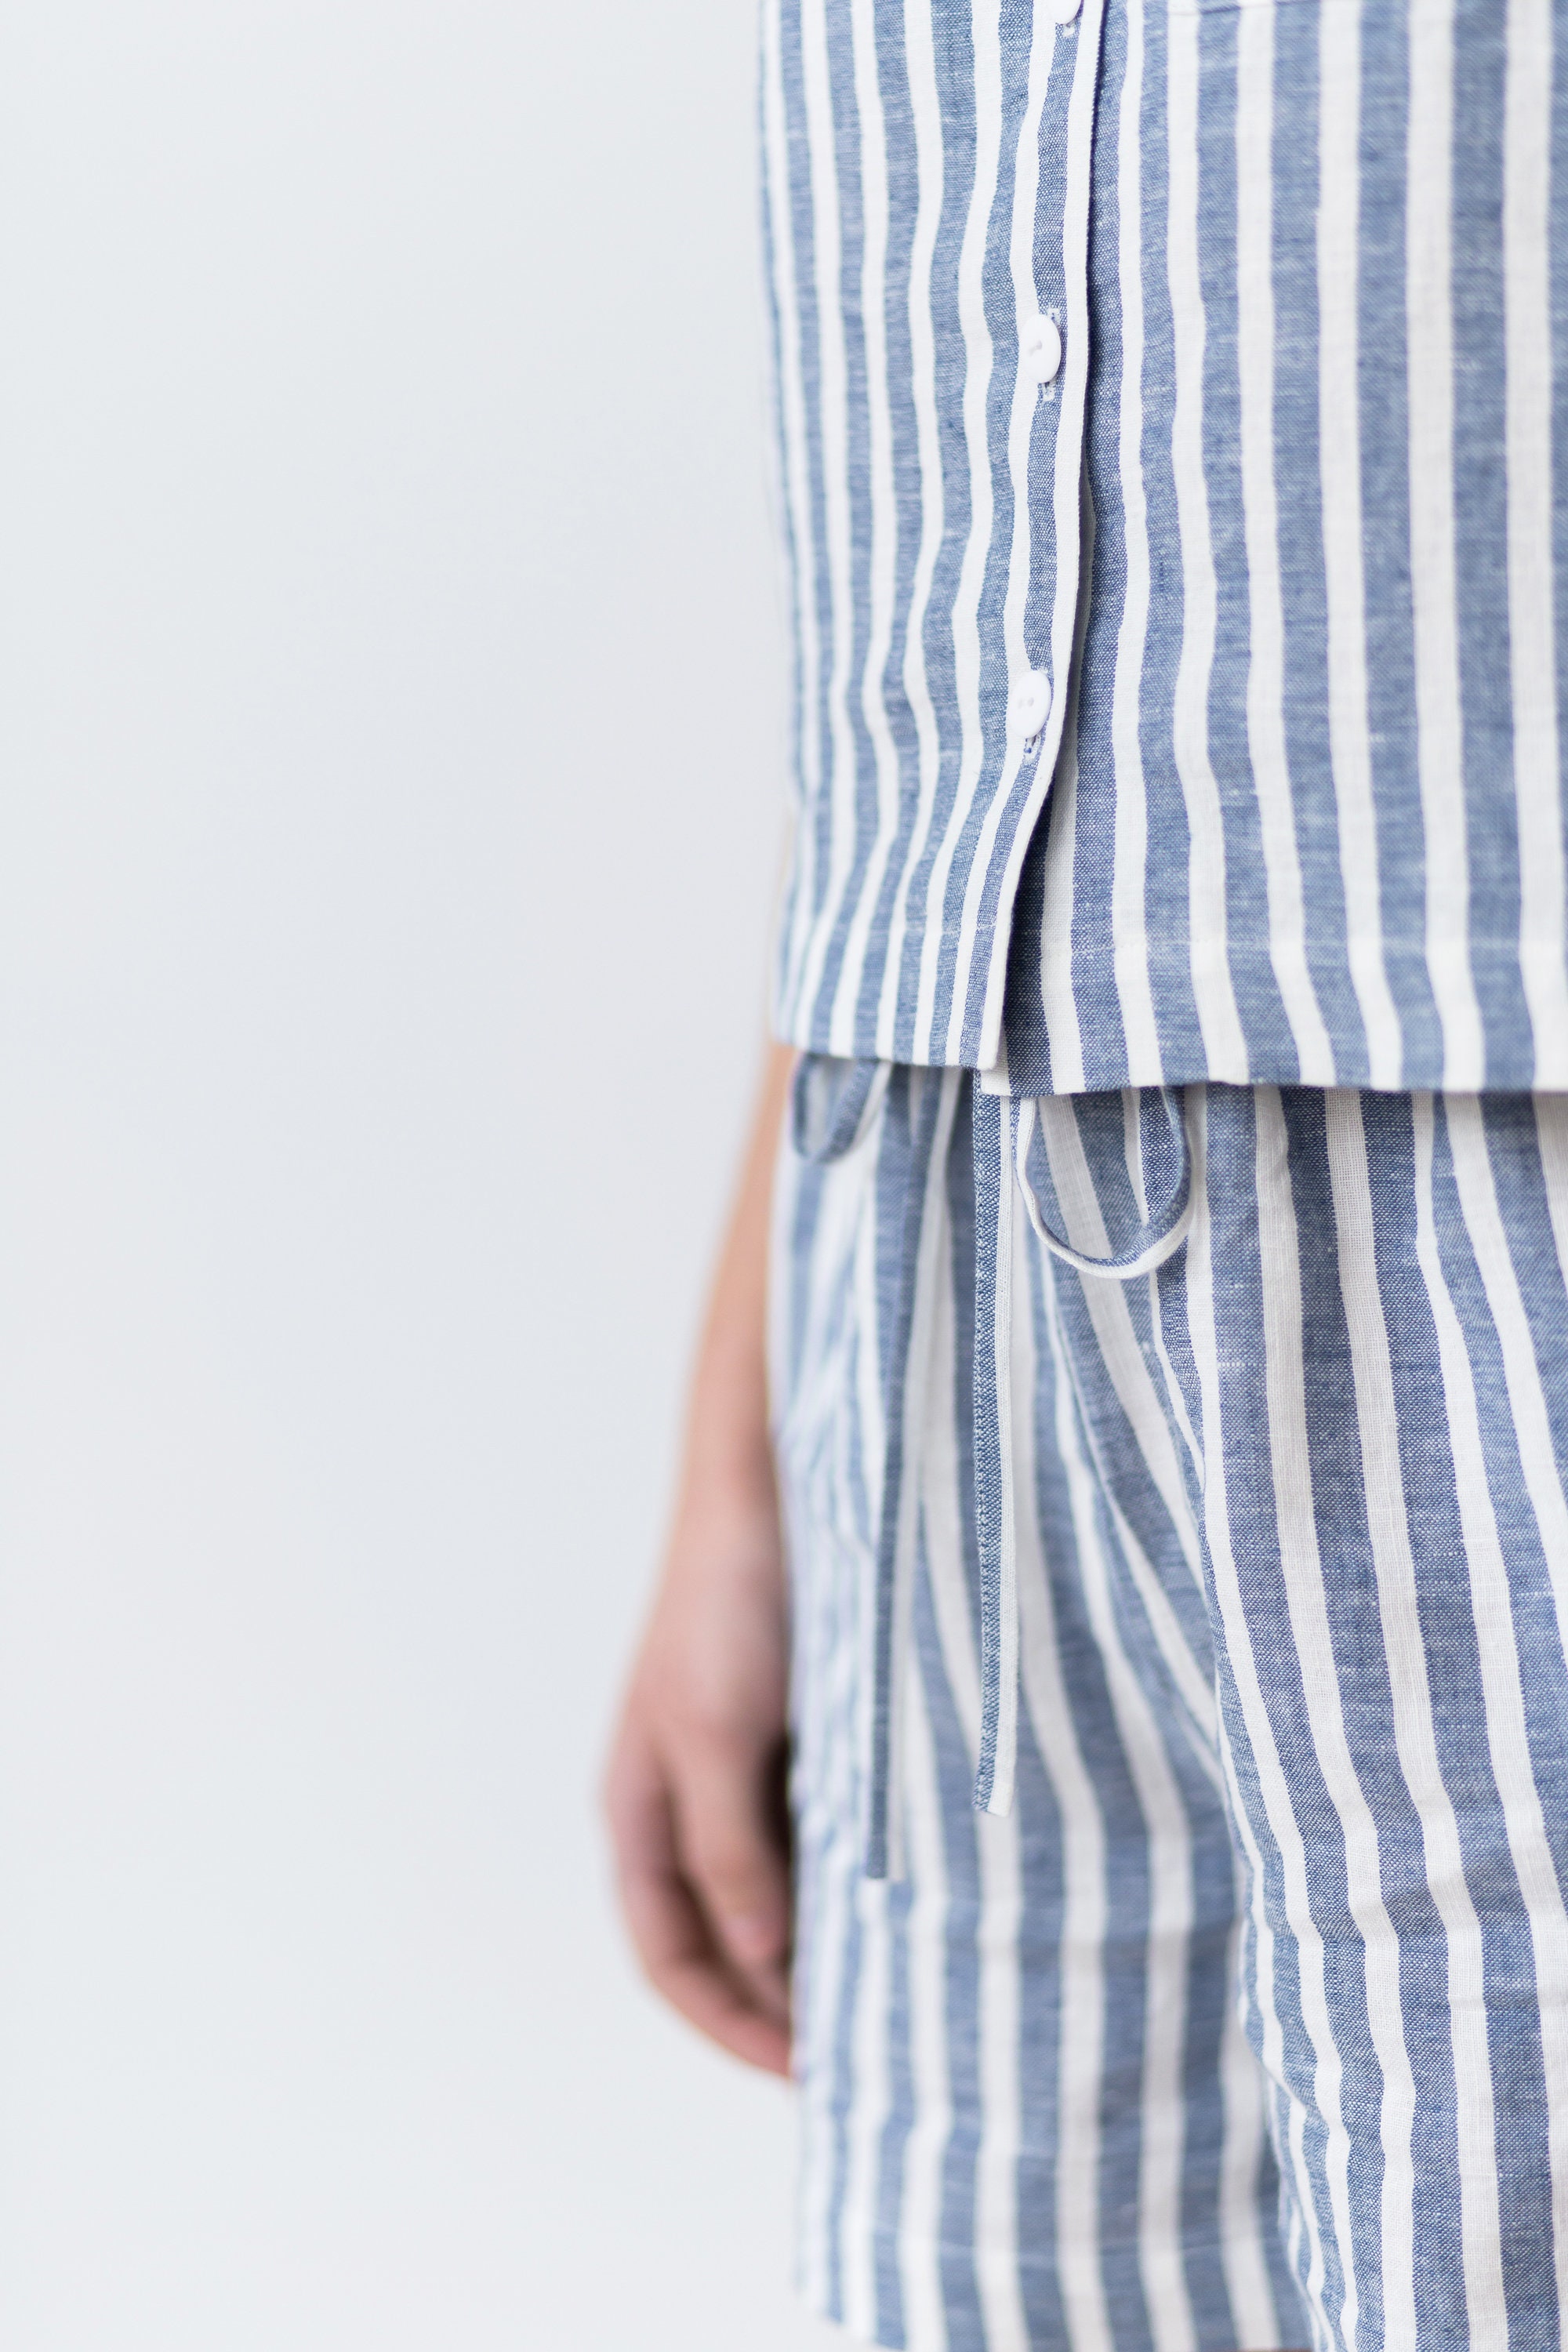 Striped Women pyjama, linen pajamas - Linenbee